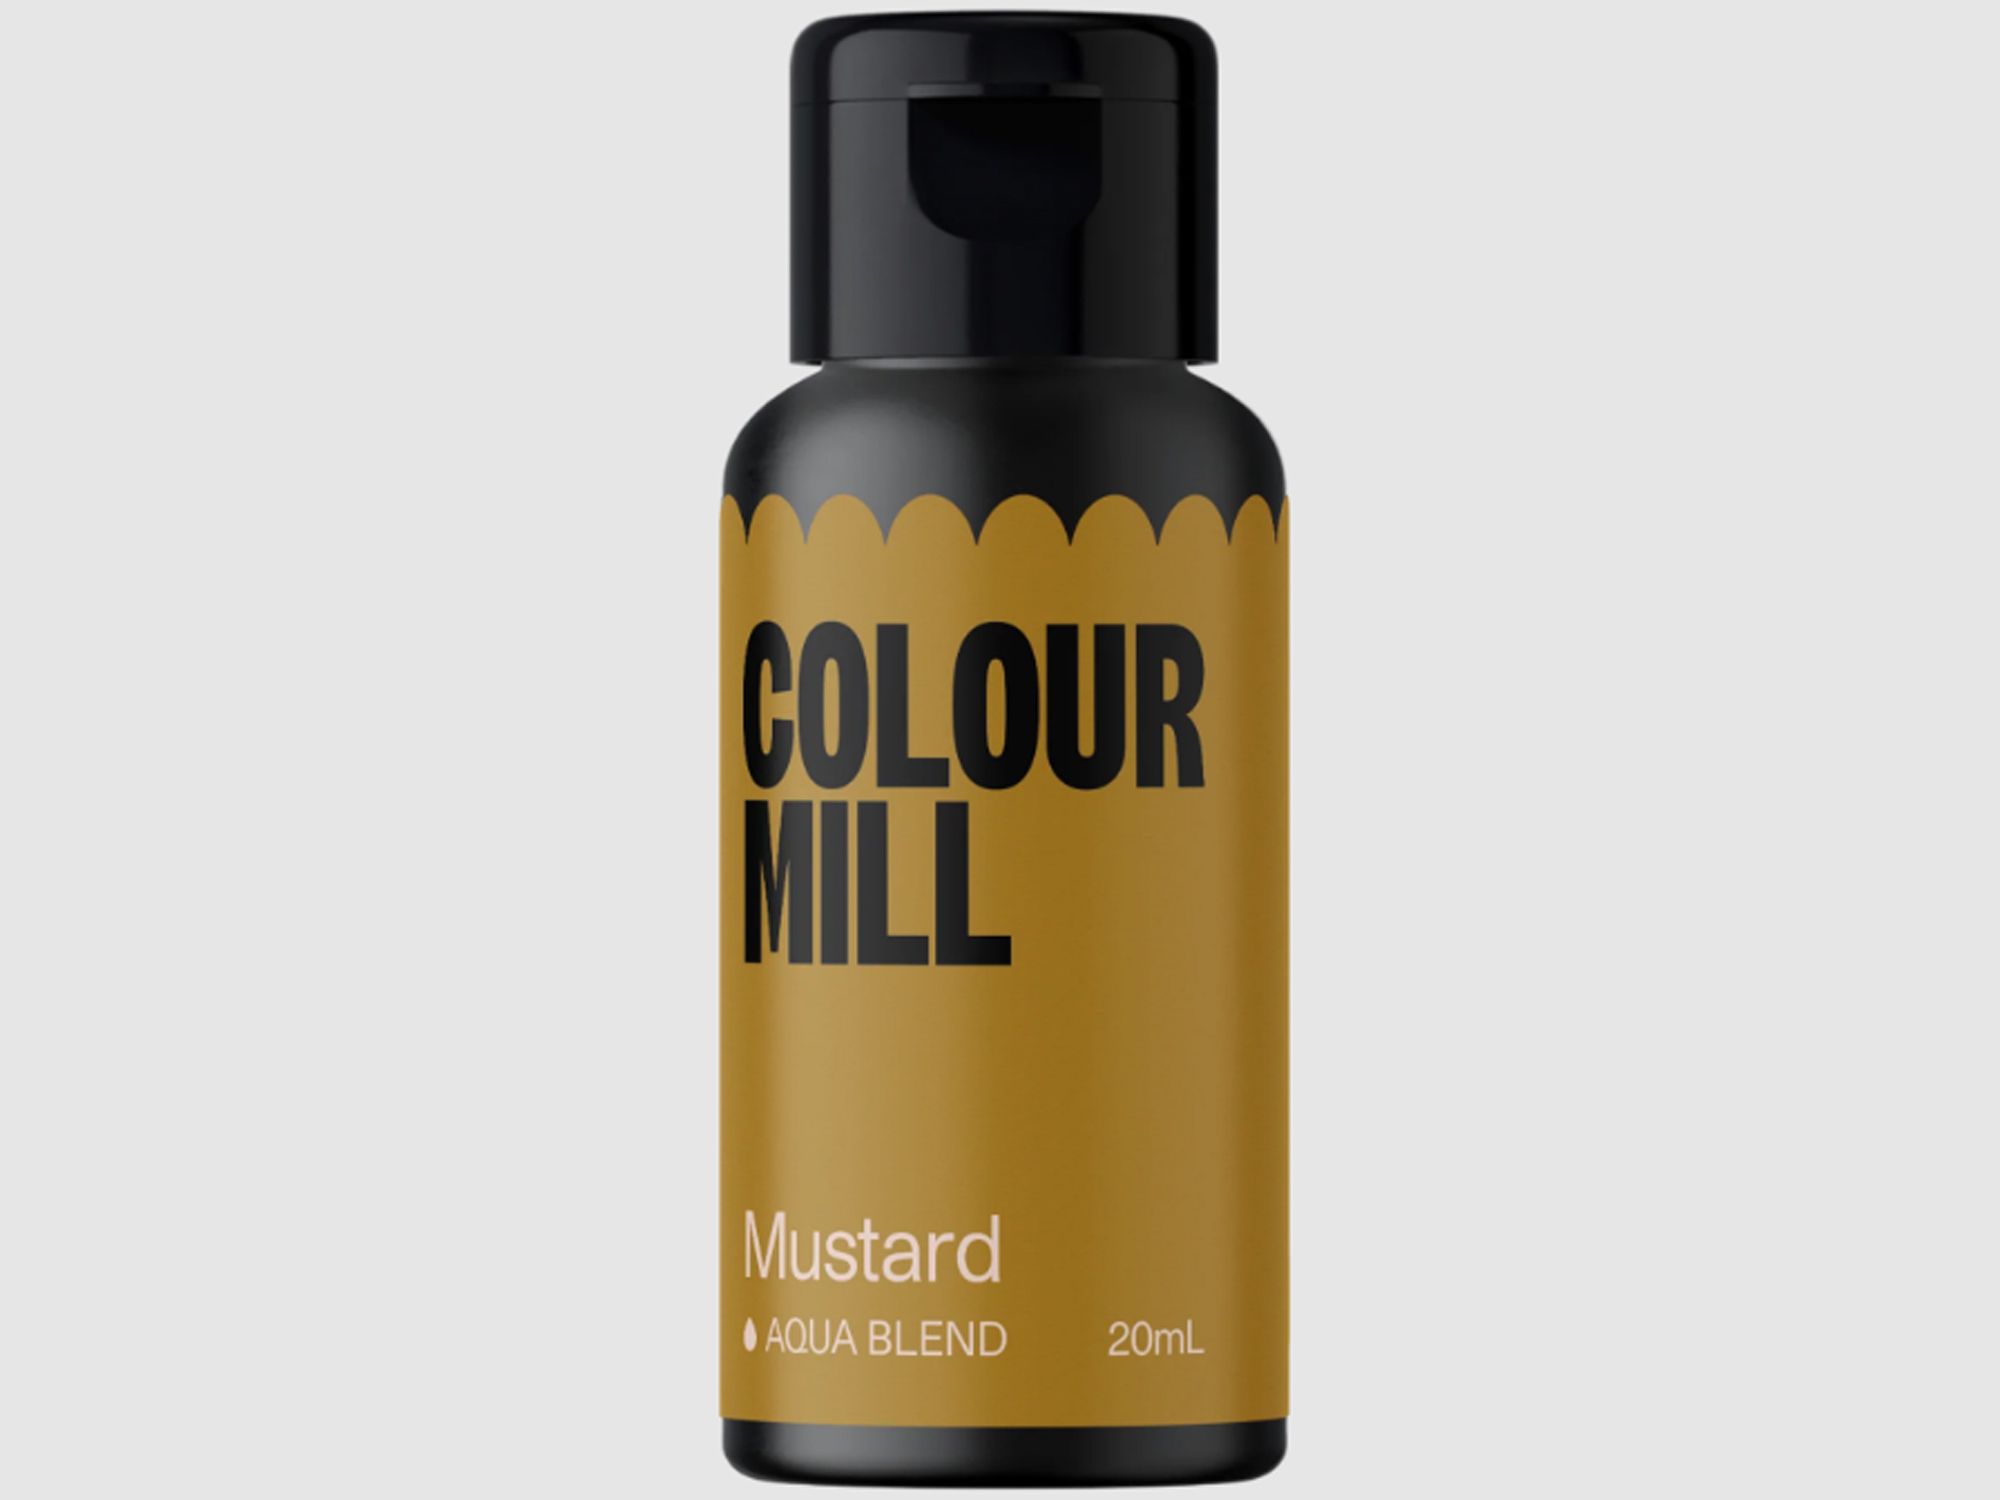 Colour Mill Mustard (Aqua Blend) 20ml